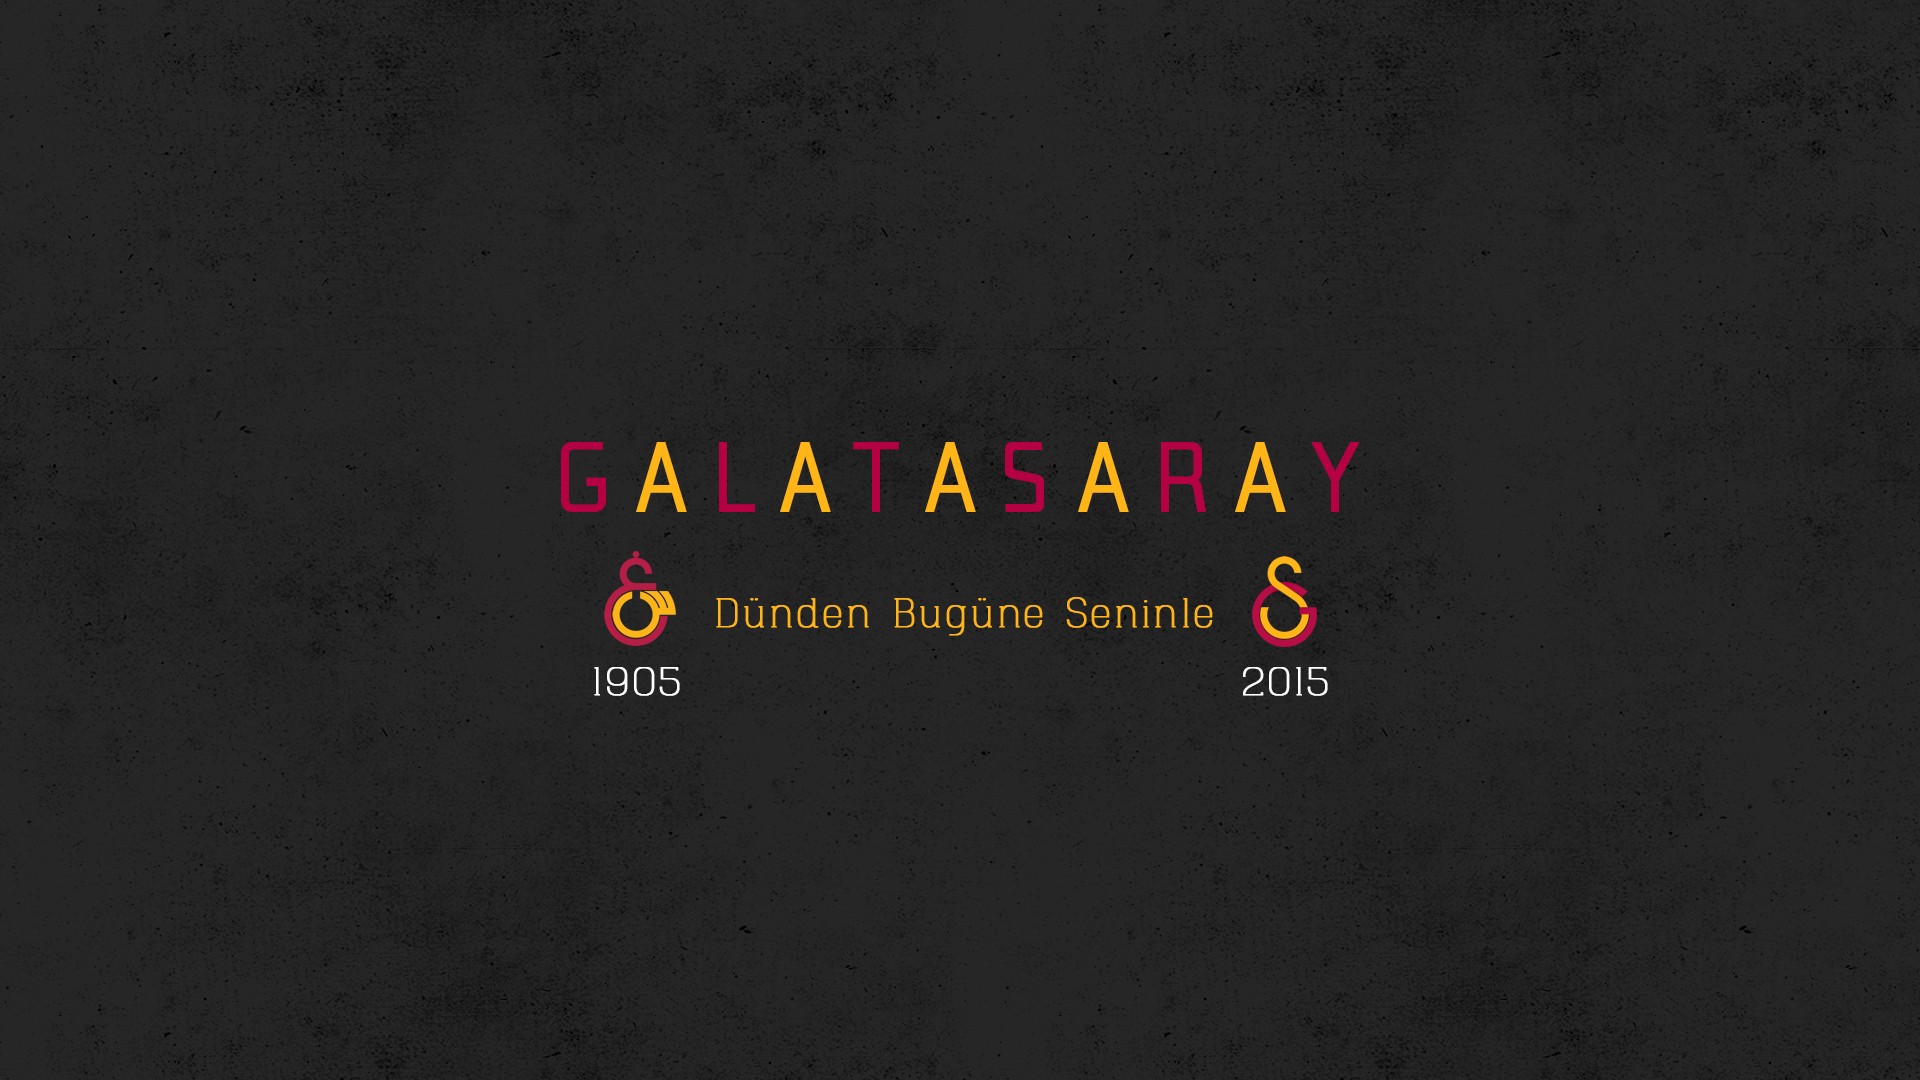 General 1920x1080 Galatasaray S.K. soccer clubs Turkey Turkish sport simple background dark background typography soccer 1905 (Year) 2015 (Year)